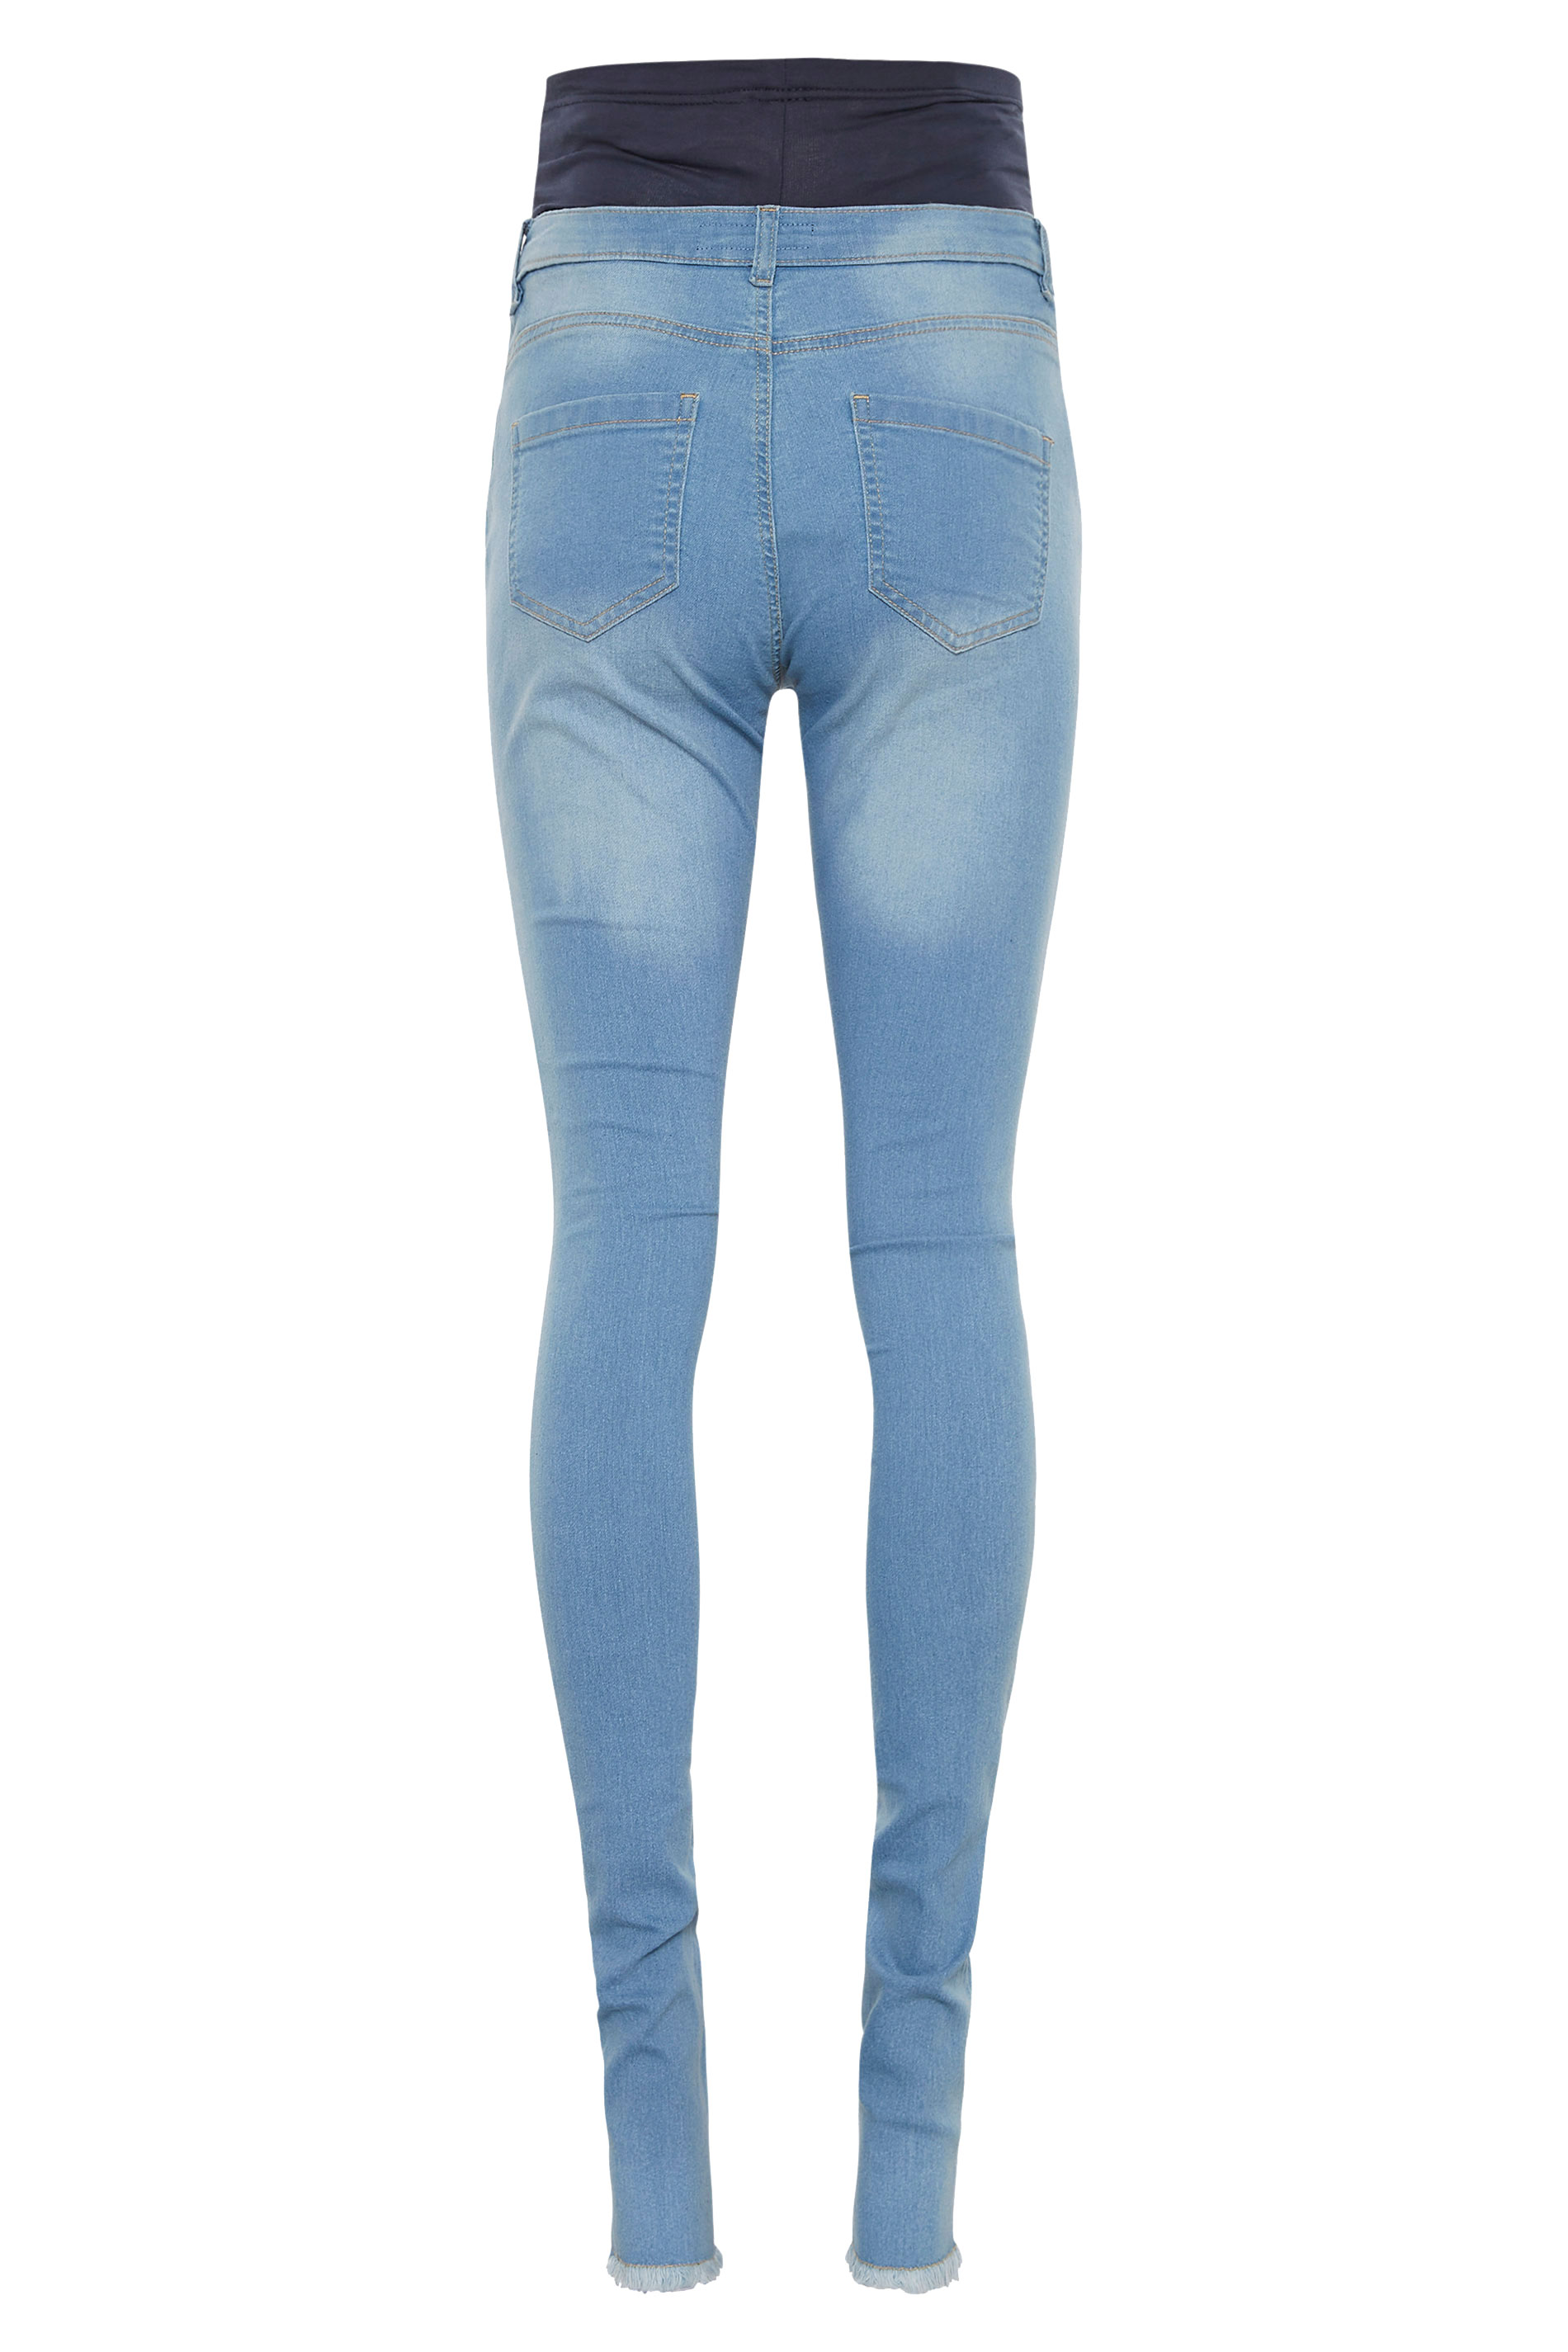 Tall Women's LTS Maternity Blue Distressed Skinny Jeans | Long Tall Sally 3